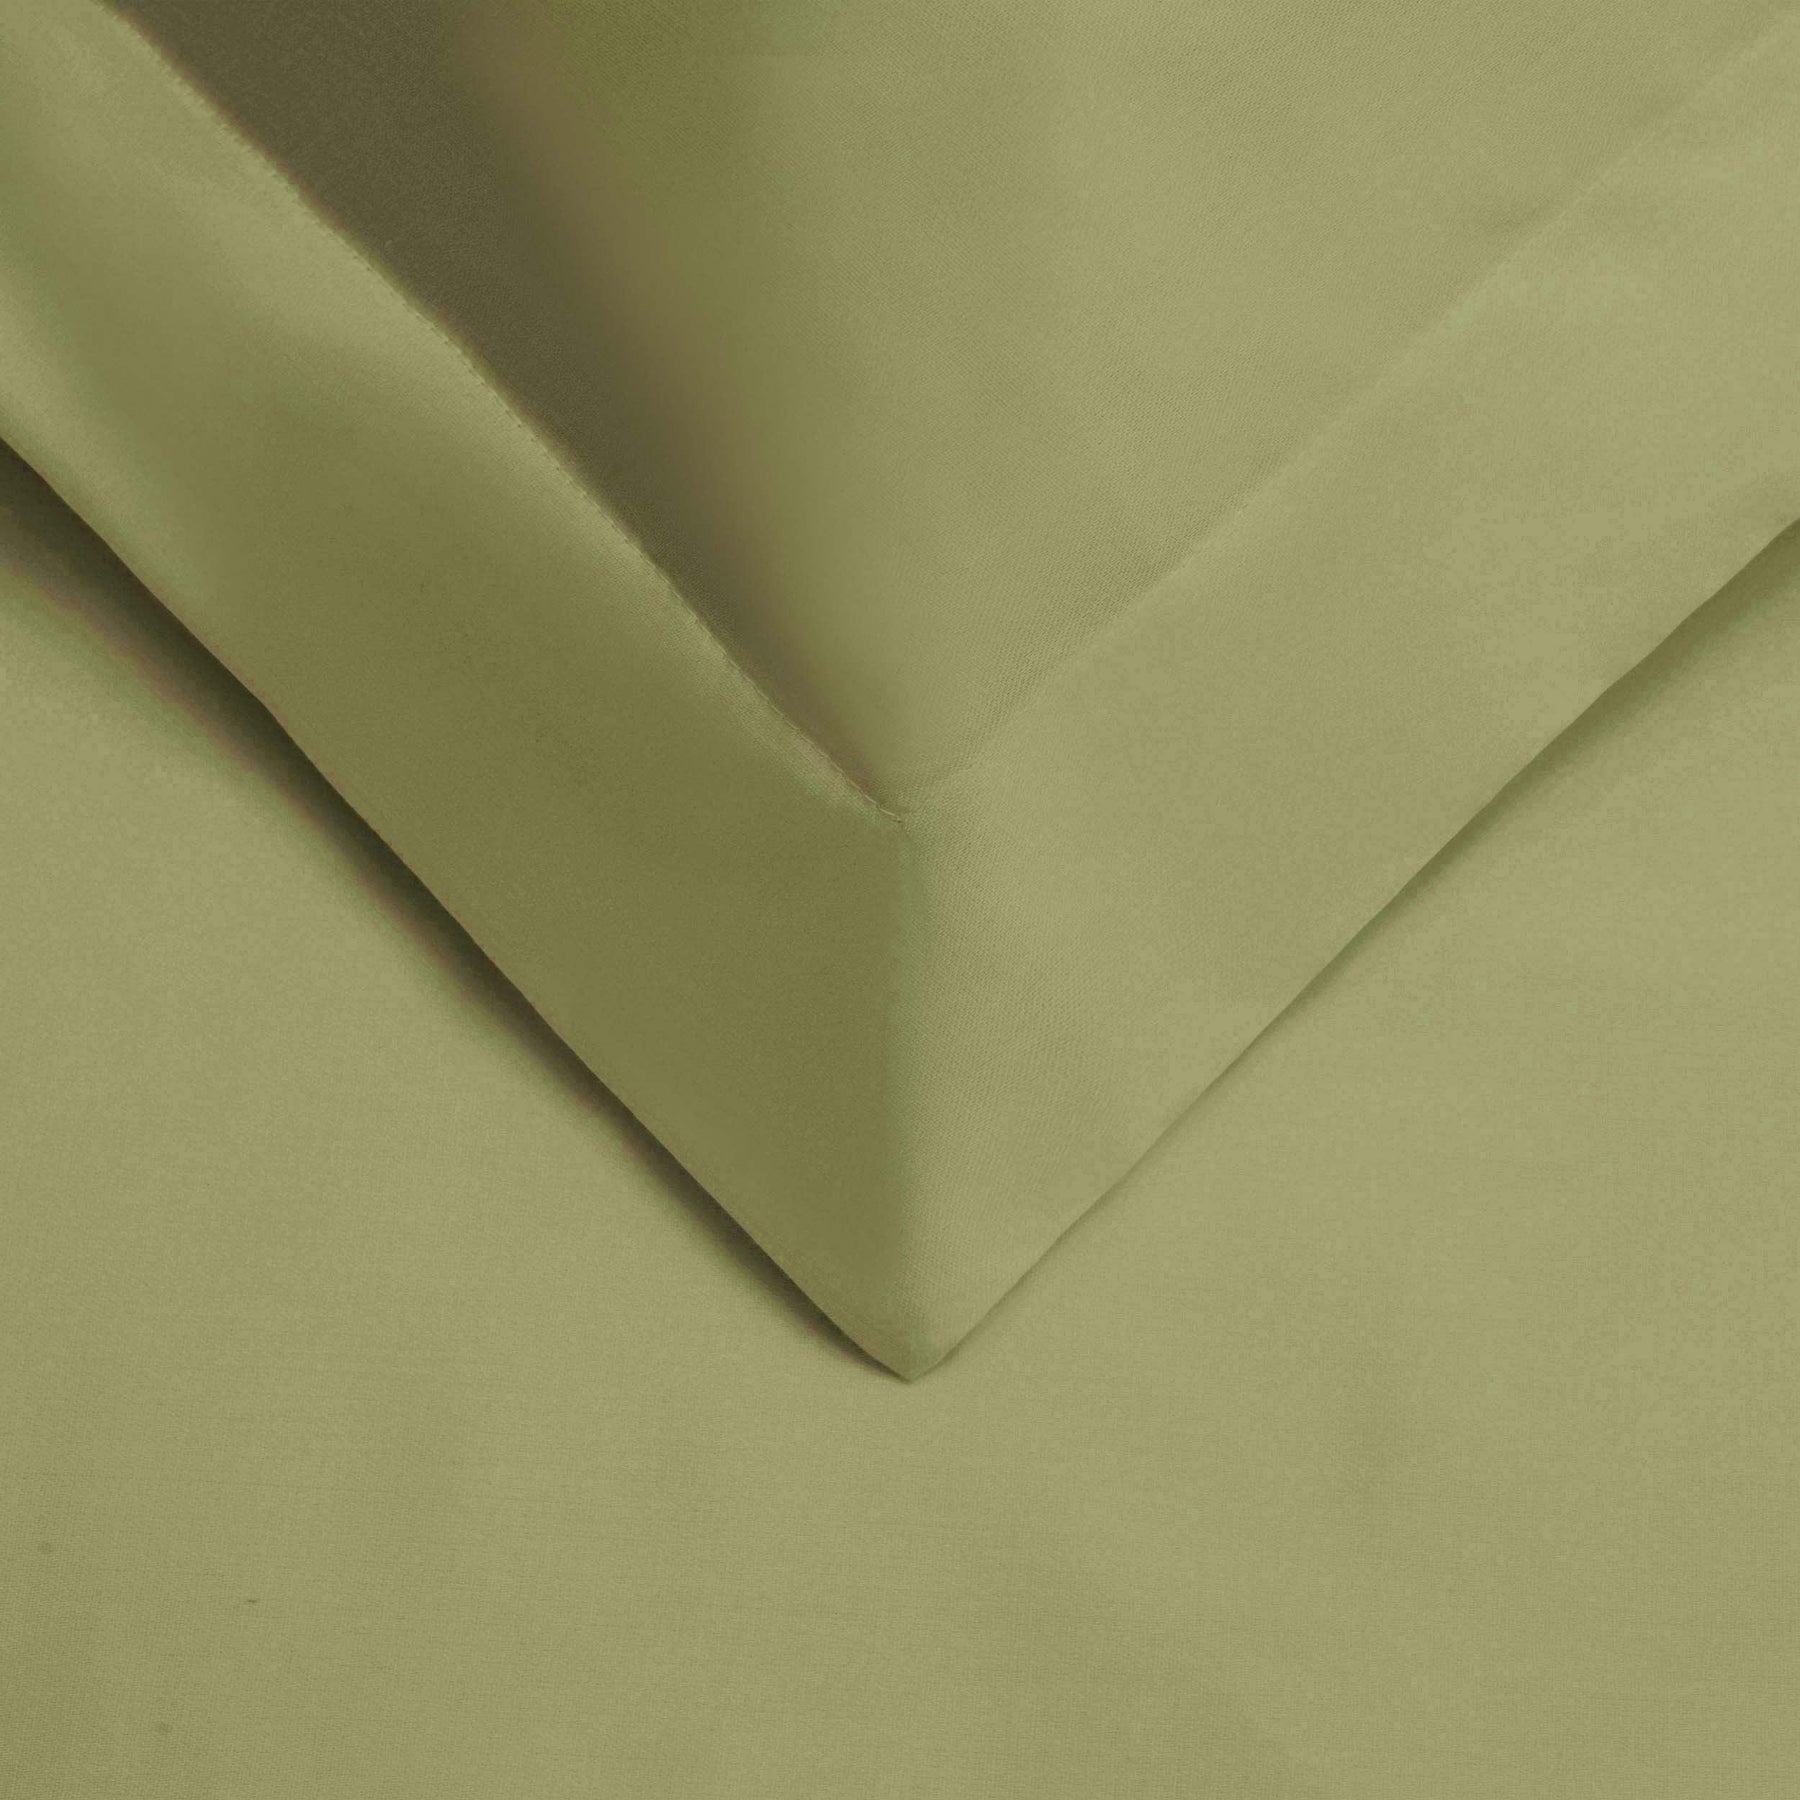  Superior Premium Egyptian Cotton 530 Thread Count Solid Duvet Cover Set - Sage